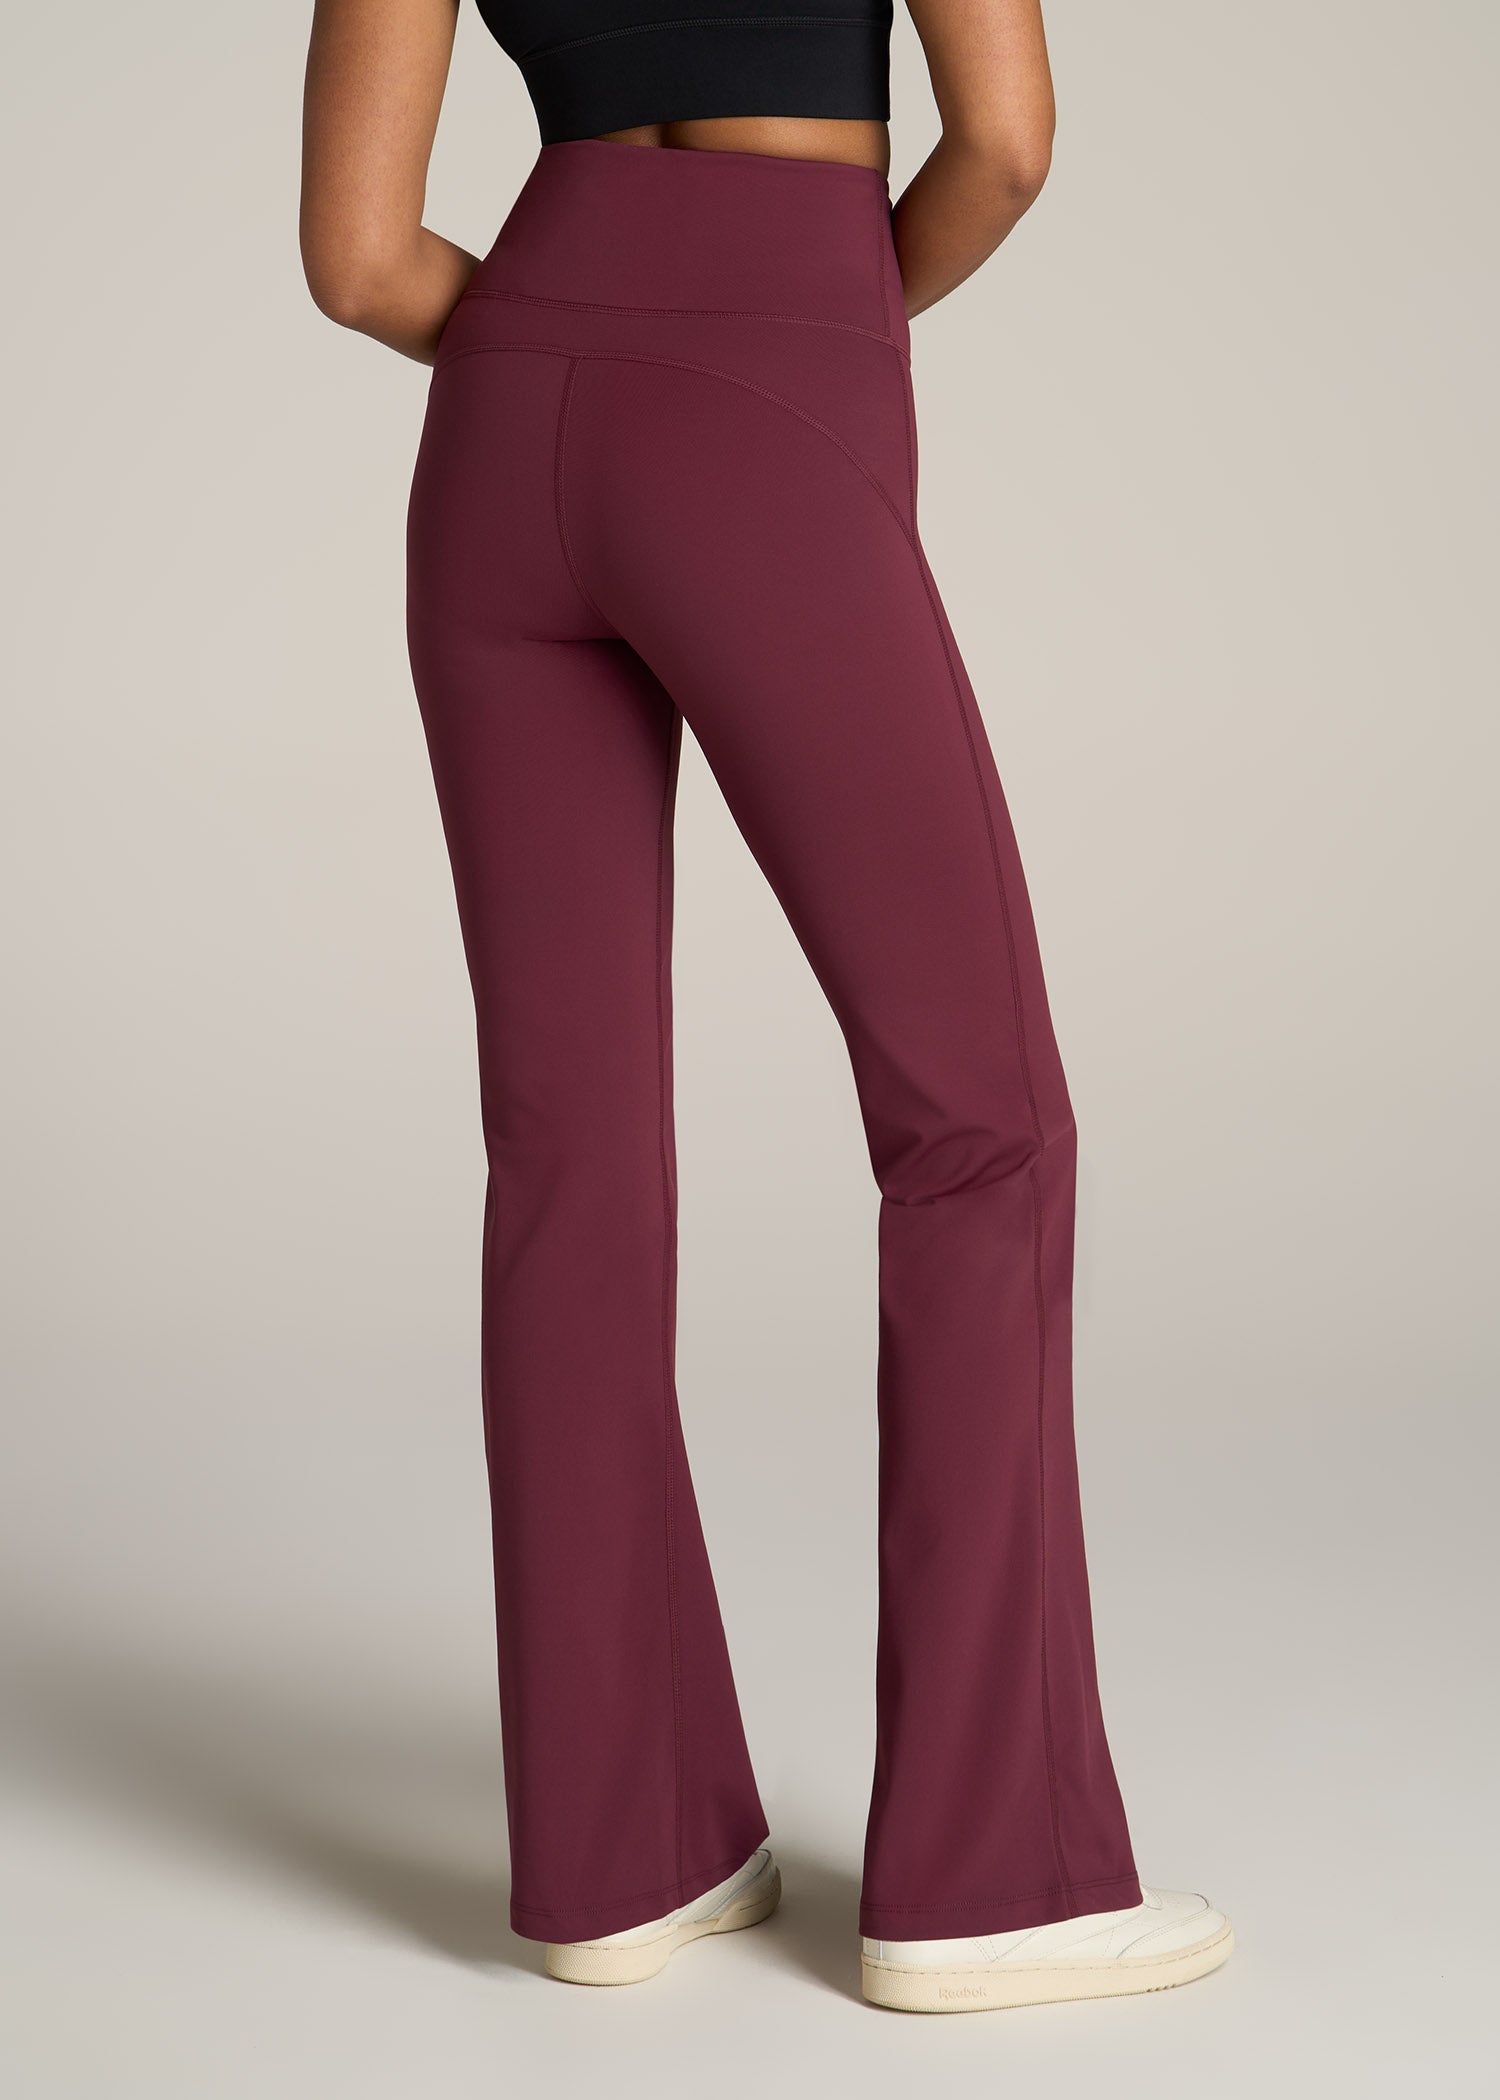 Women Tall Cotton Legging Dusty Merlot | American Tall | Long leggings,  Womens elastic waist pants, Cotton leggings